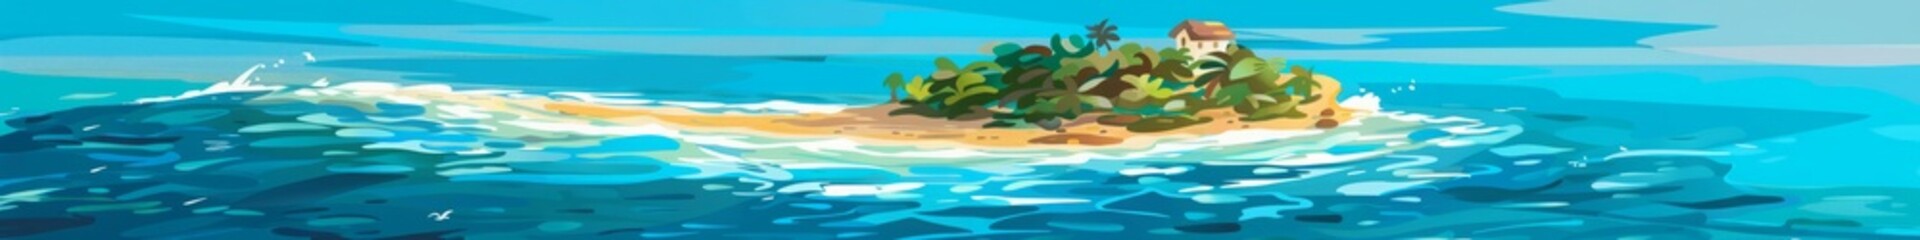 Island in the sea. sunny day.